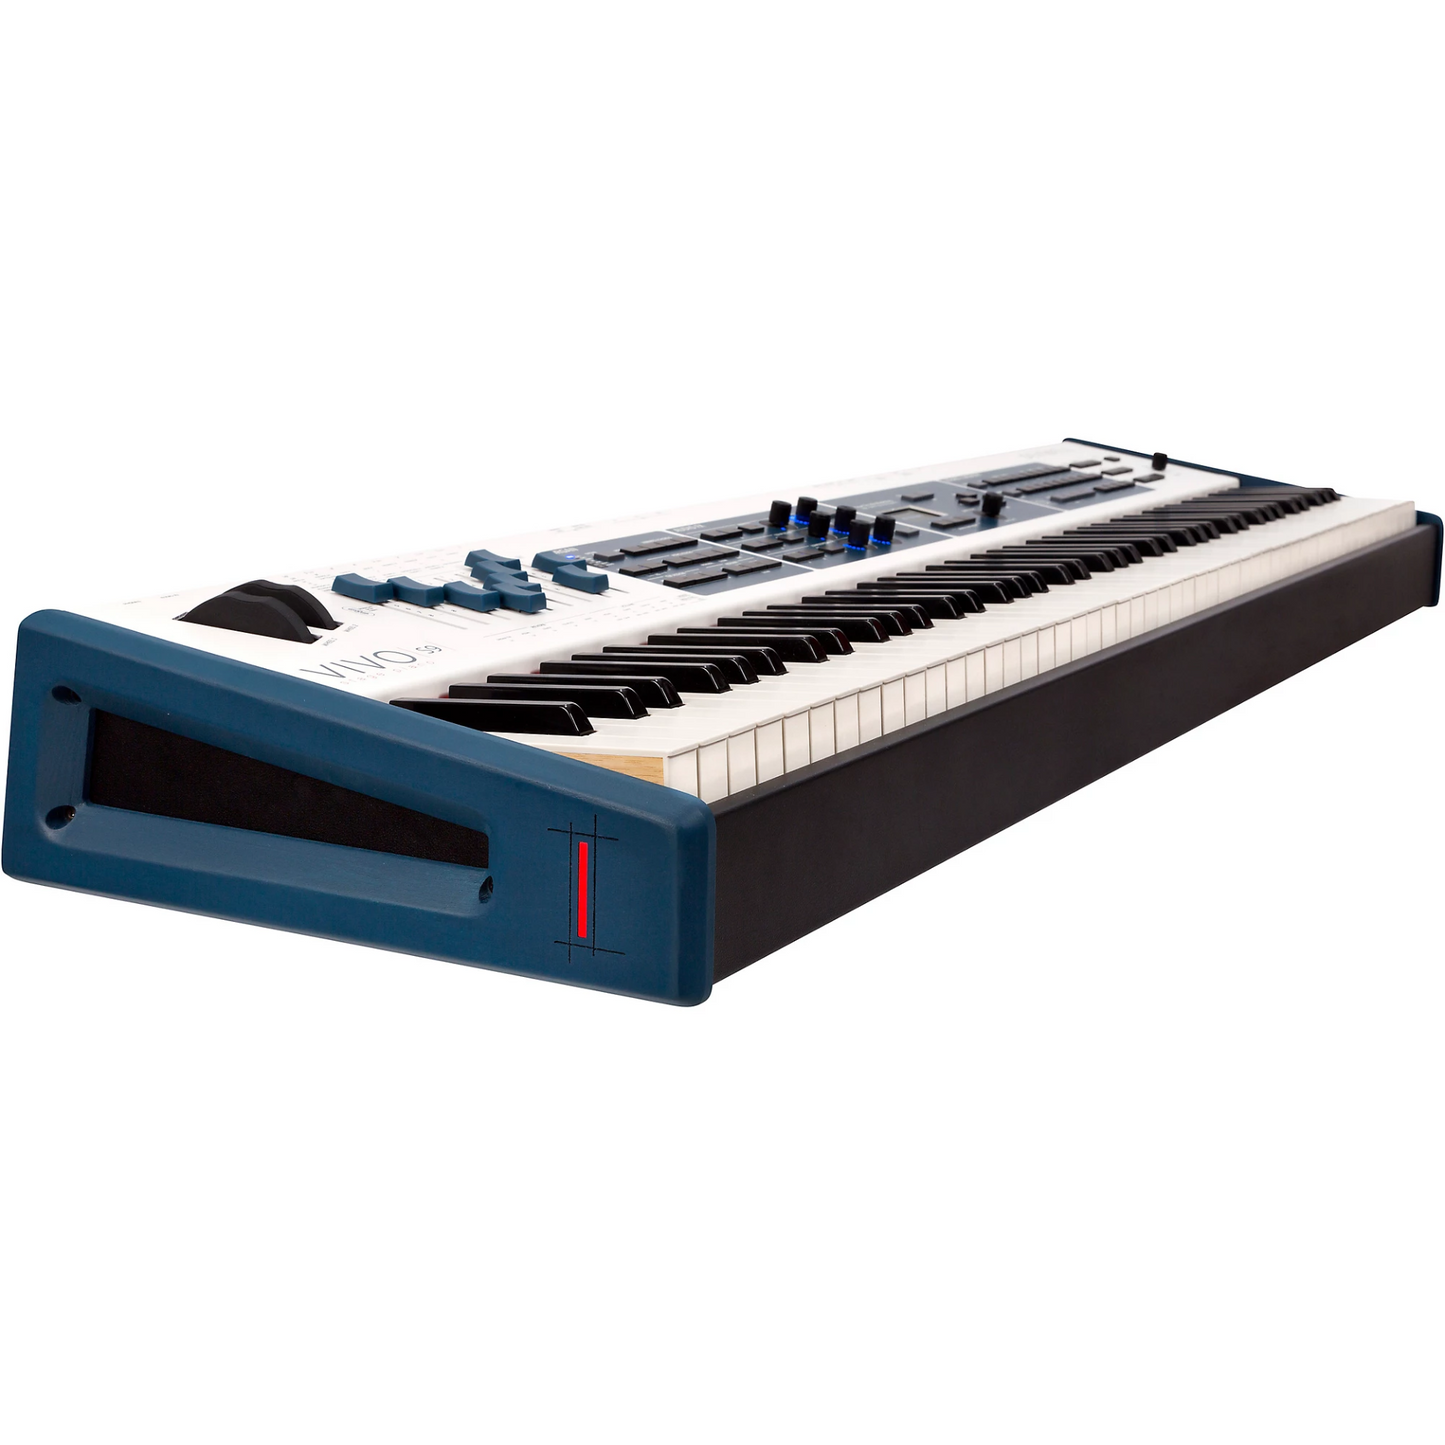 Dexibell VIVO S9 88-Key Digital Stage Piano